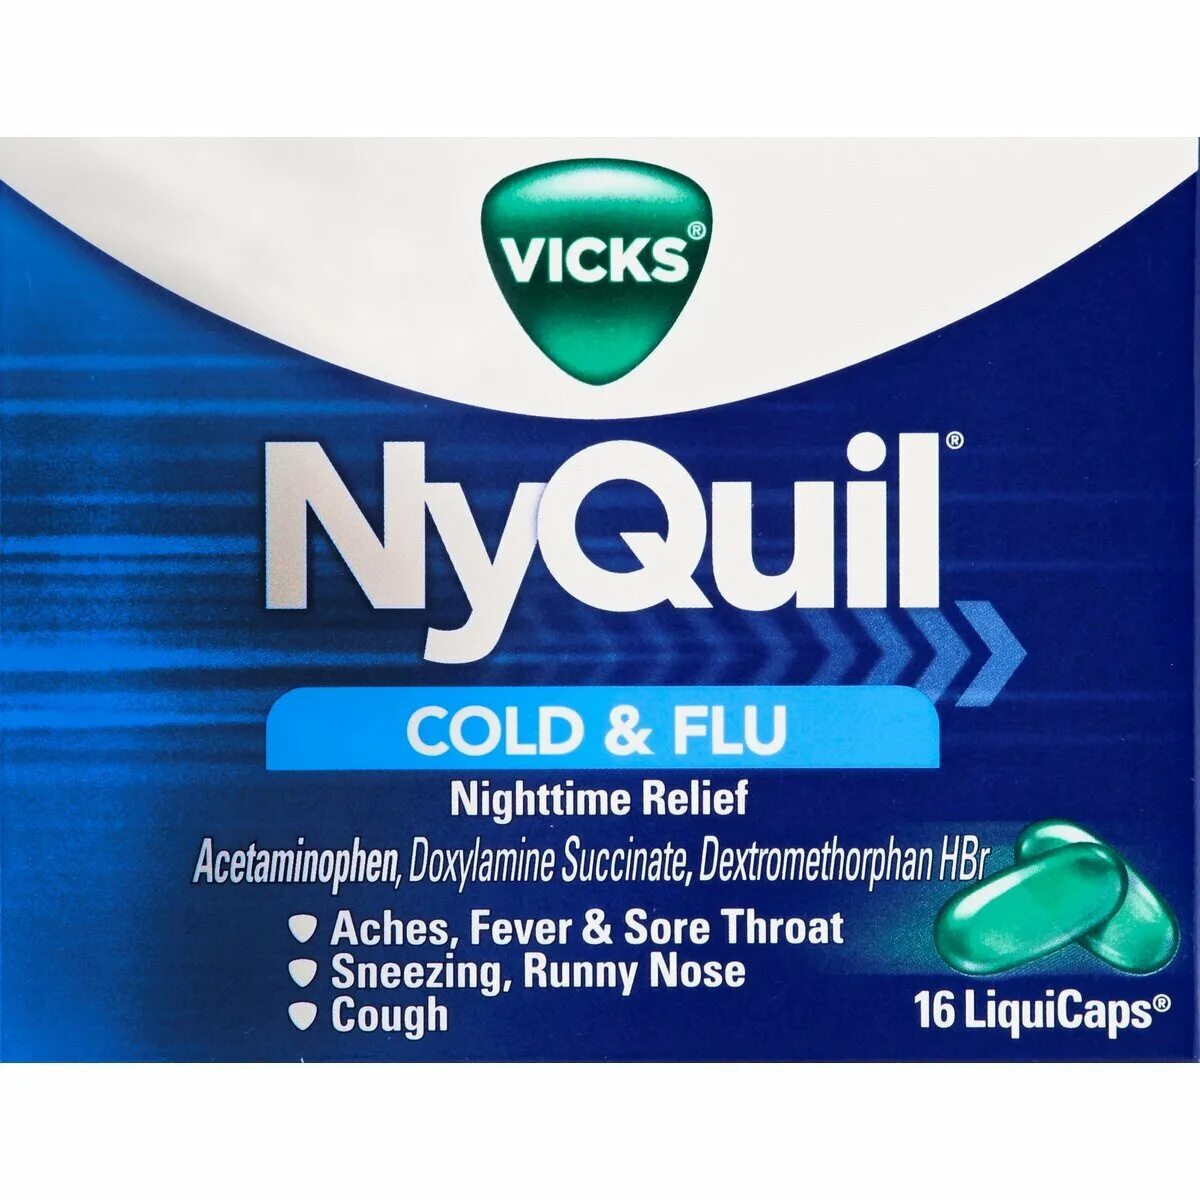 Cold таблетка. Vicks таблетки от простуды. Лекарство Cold Flu Relief. Vicks Night time. Nyquil.